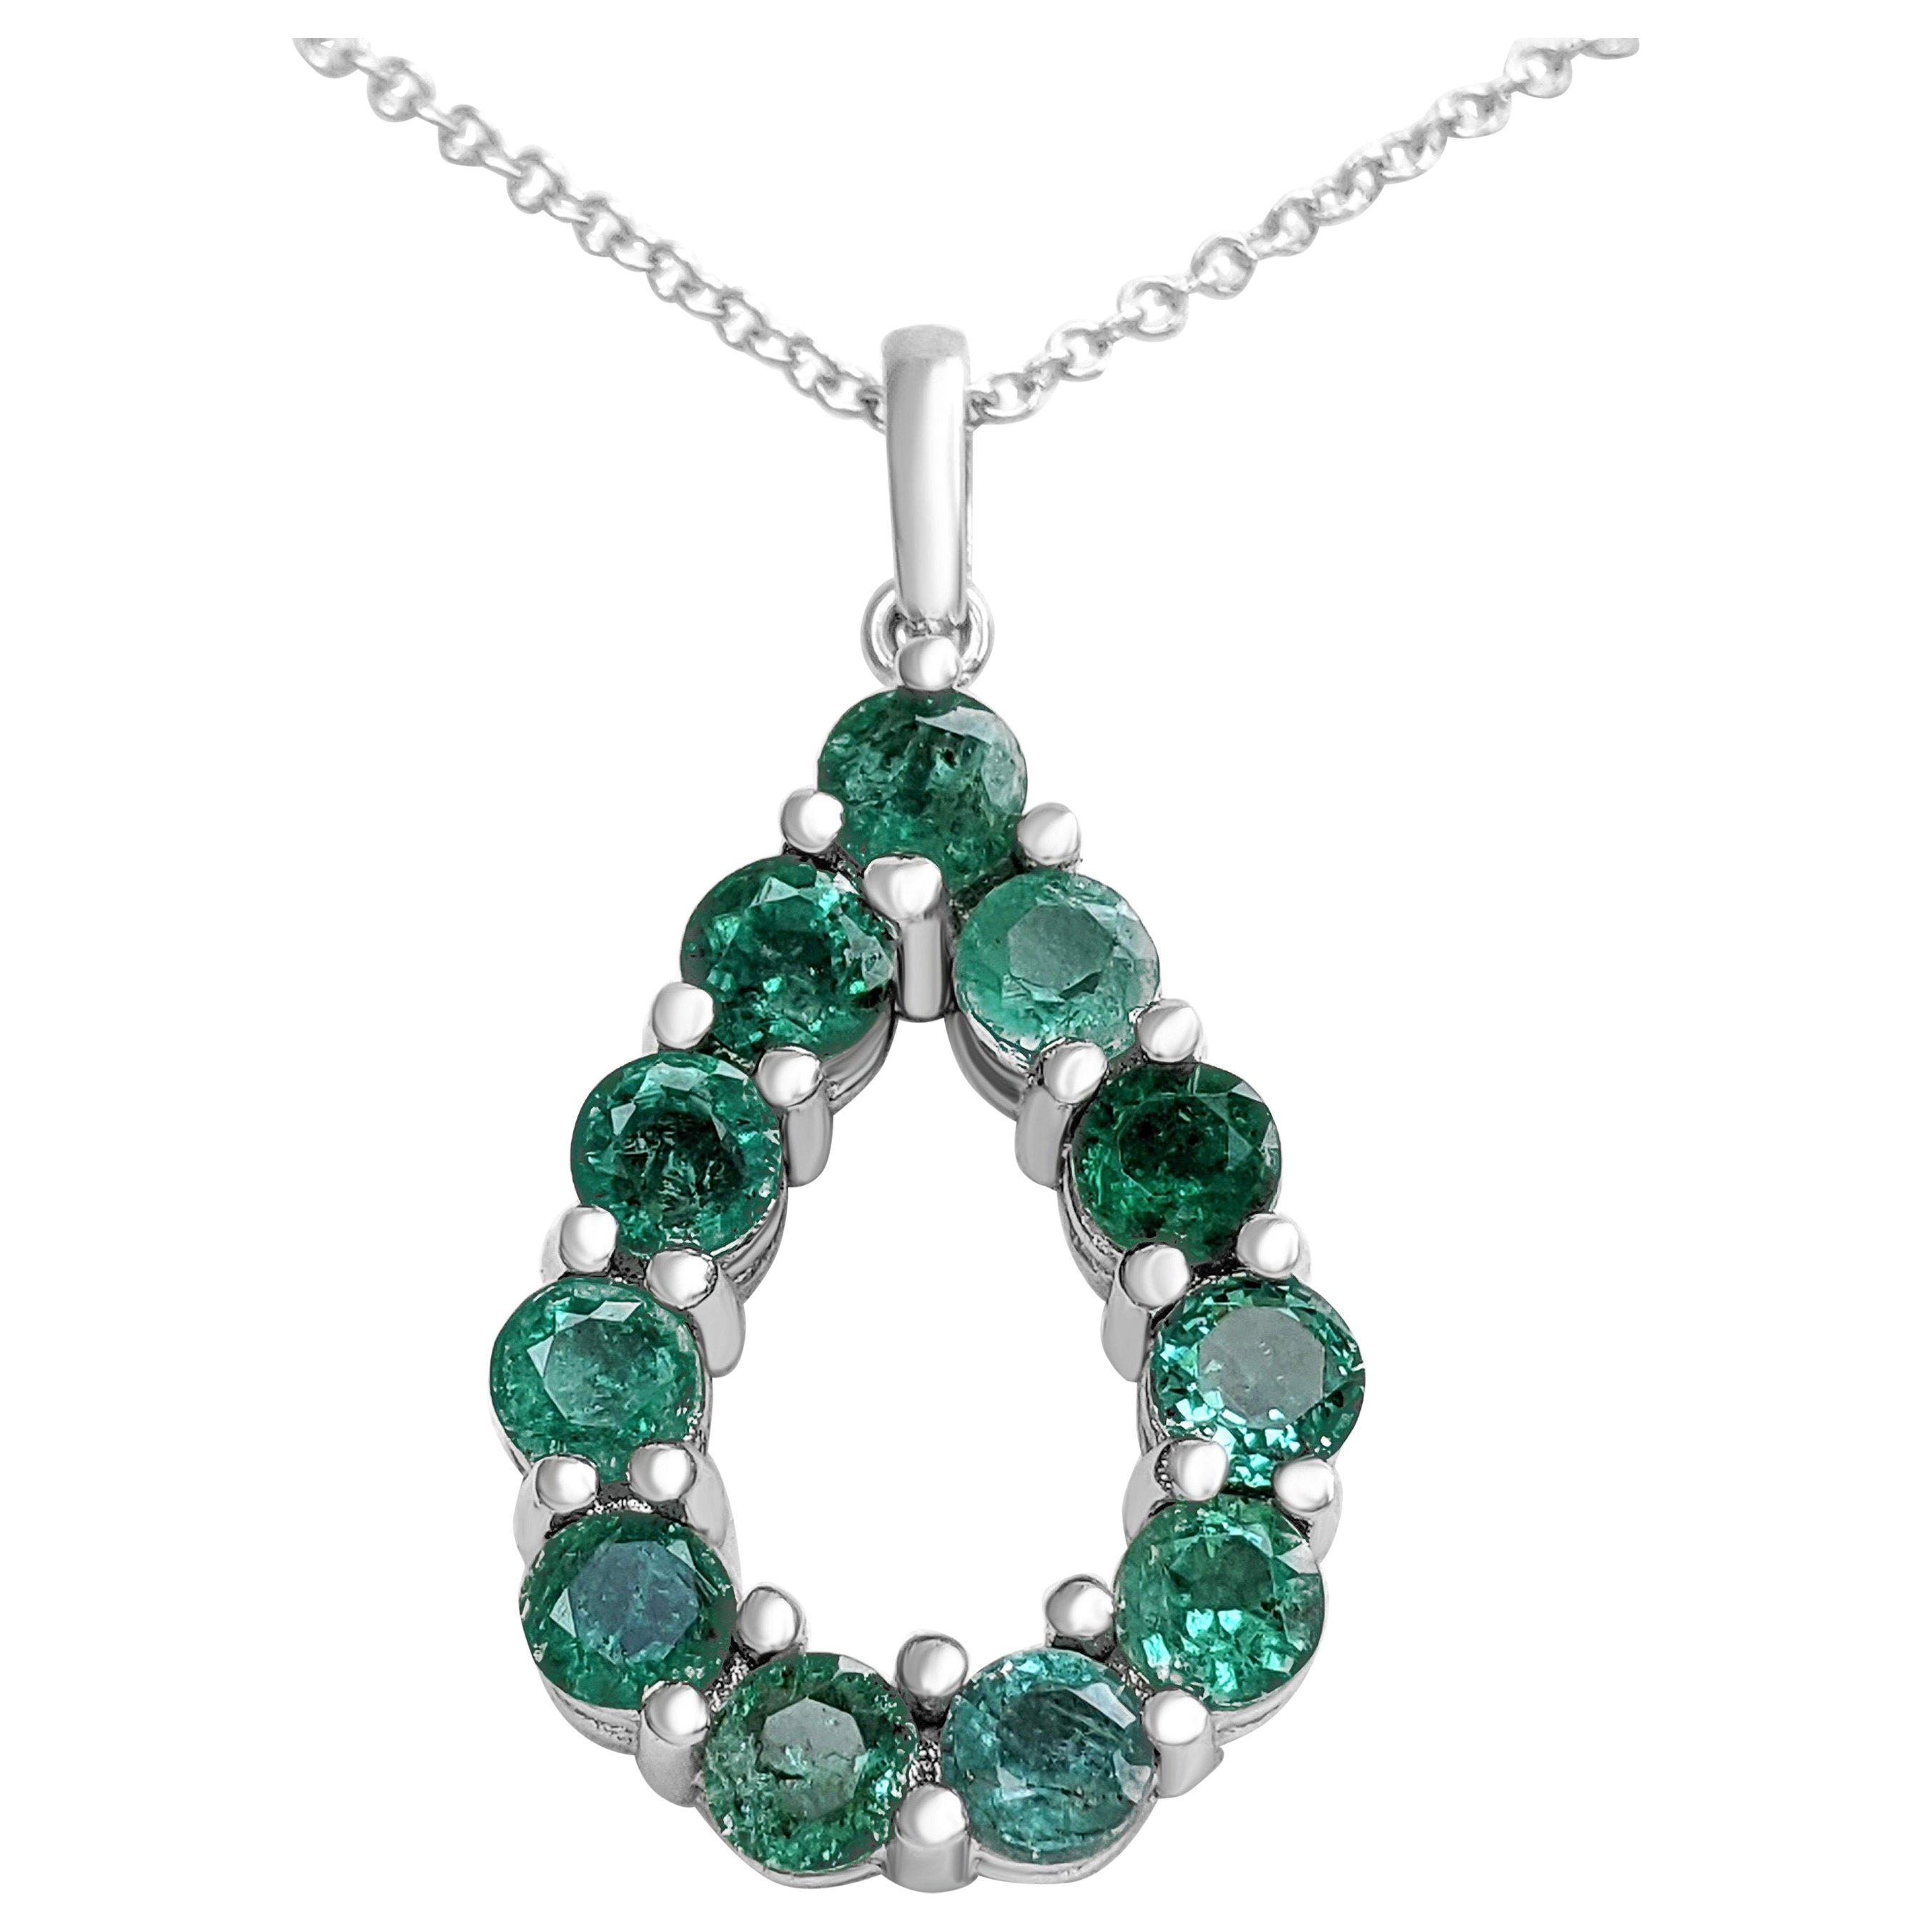 NO RESERVE! 1.61 Carat Emerald, 14 Karat White Gold, Necklace with Pendant